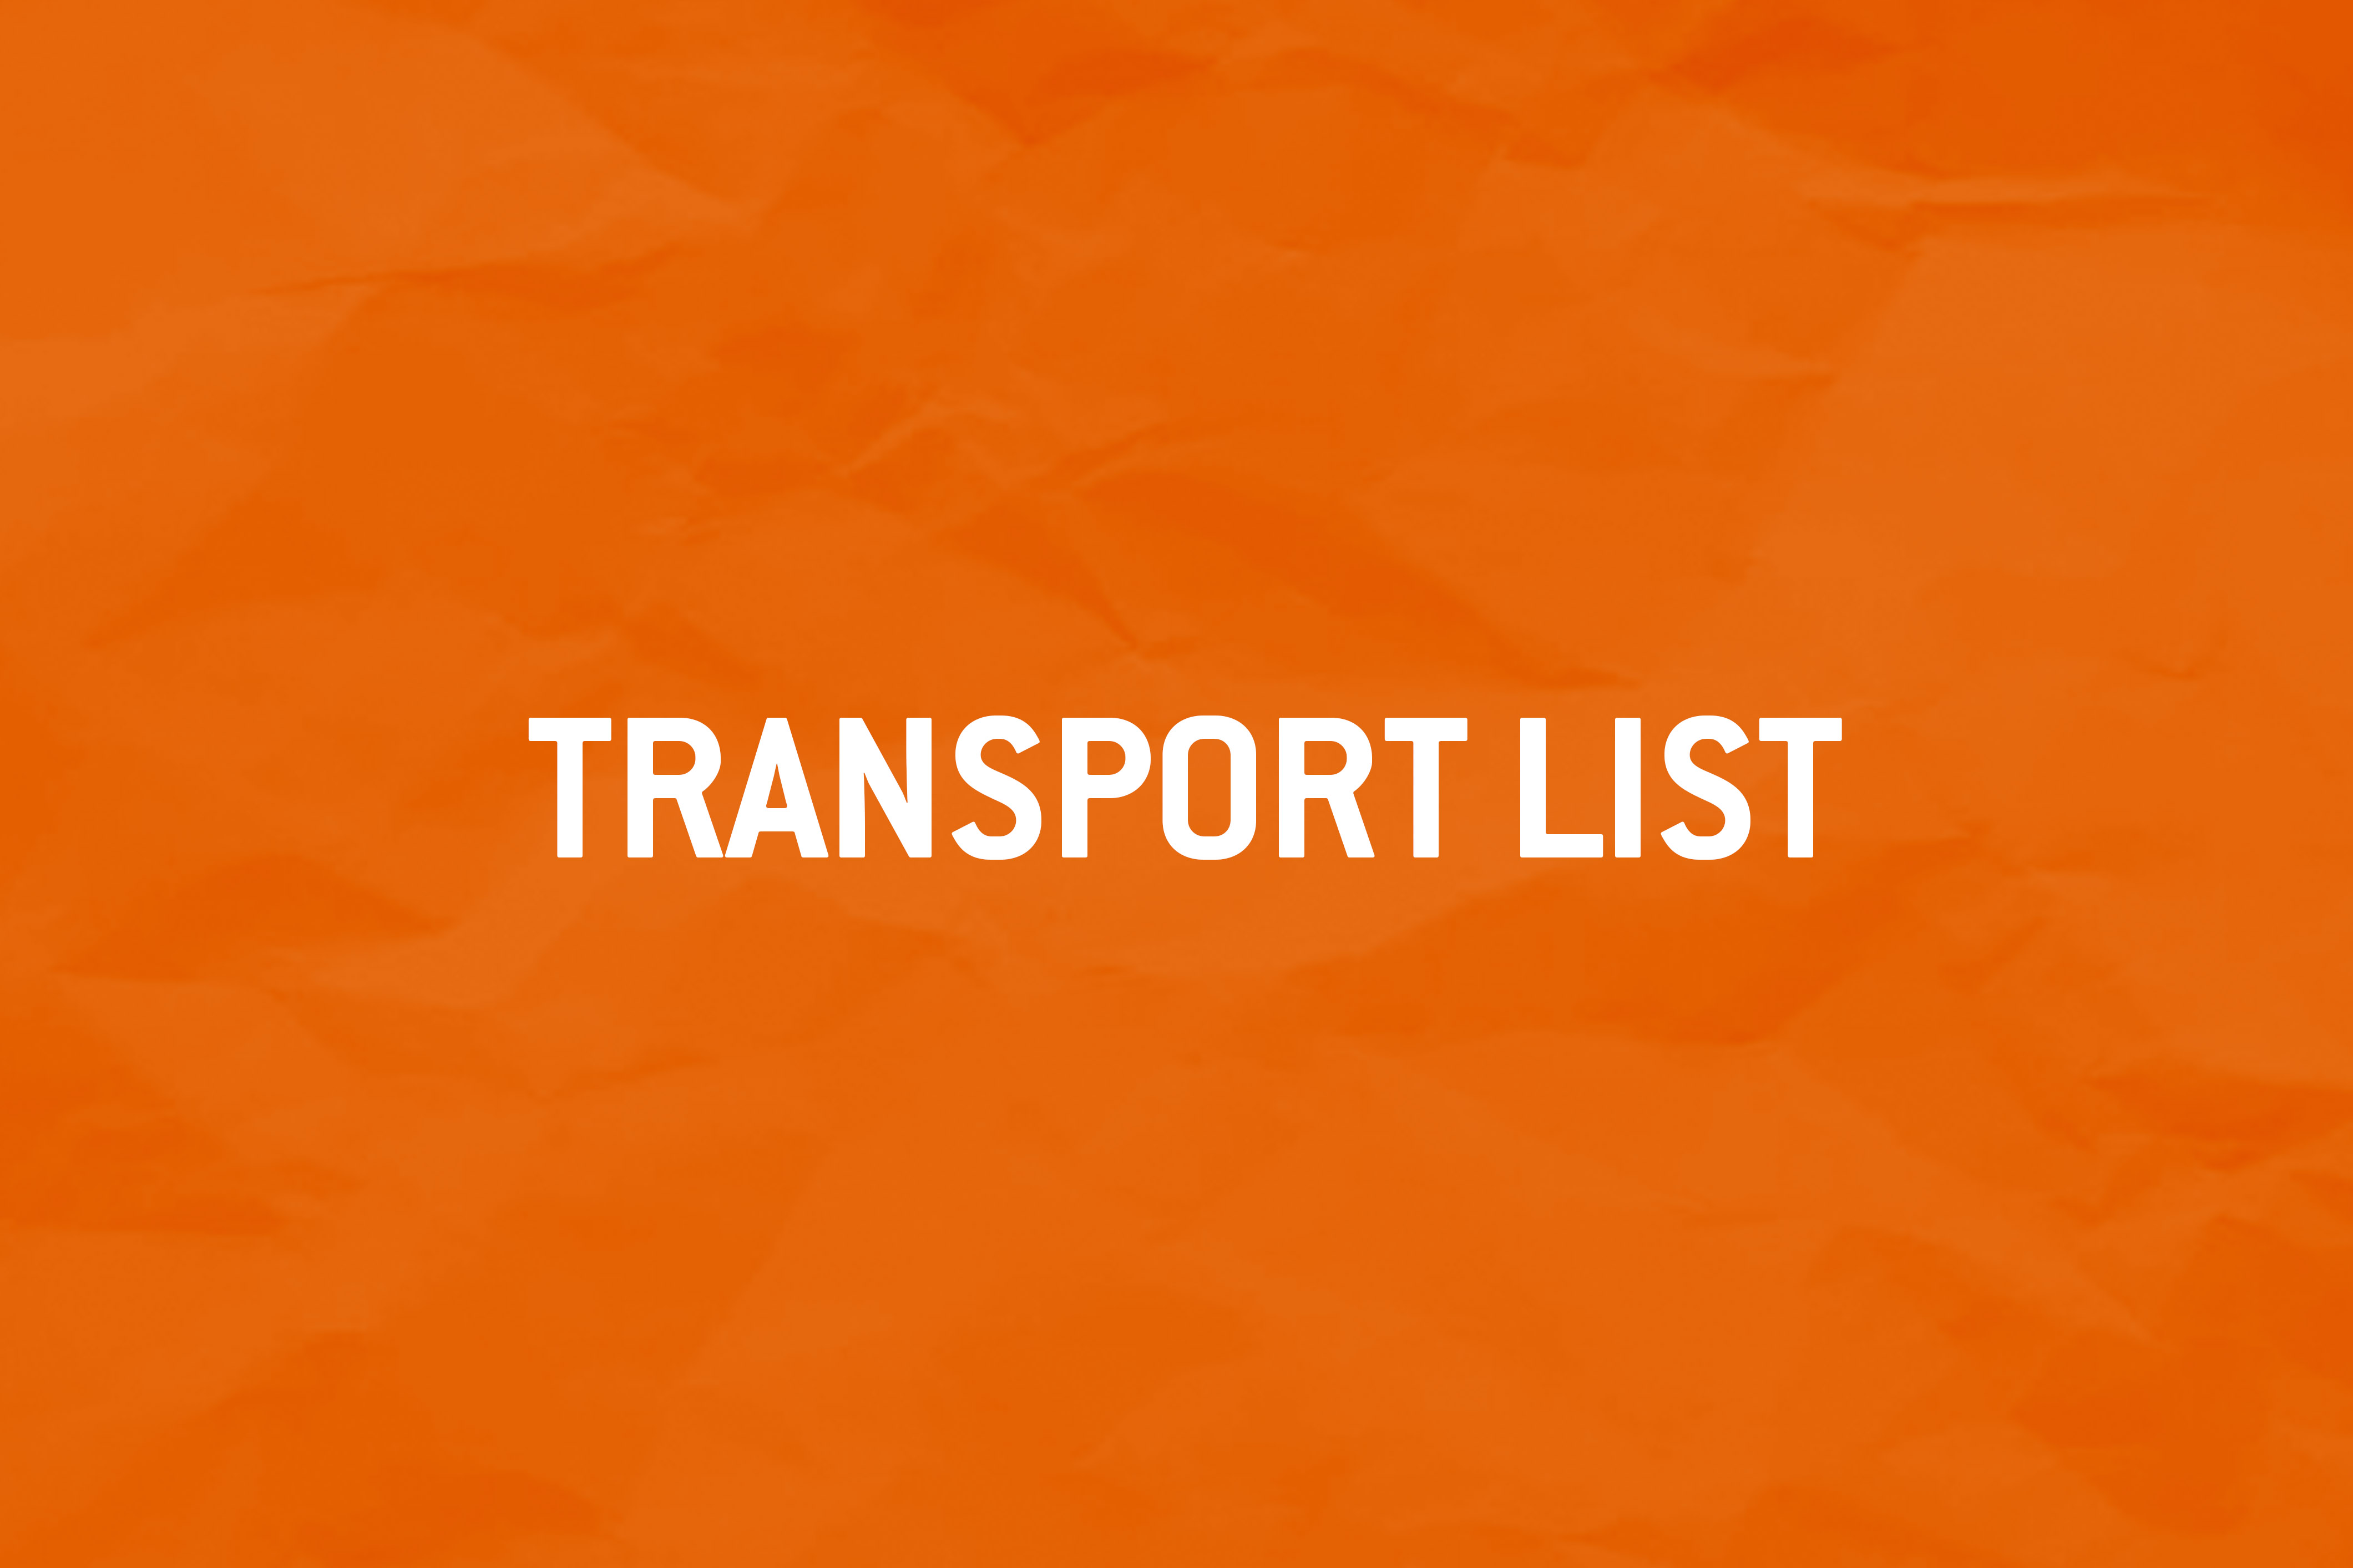 Transport List image